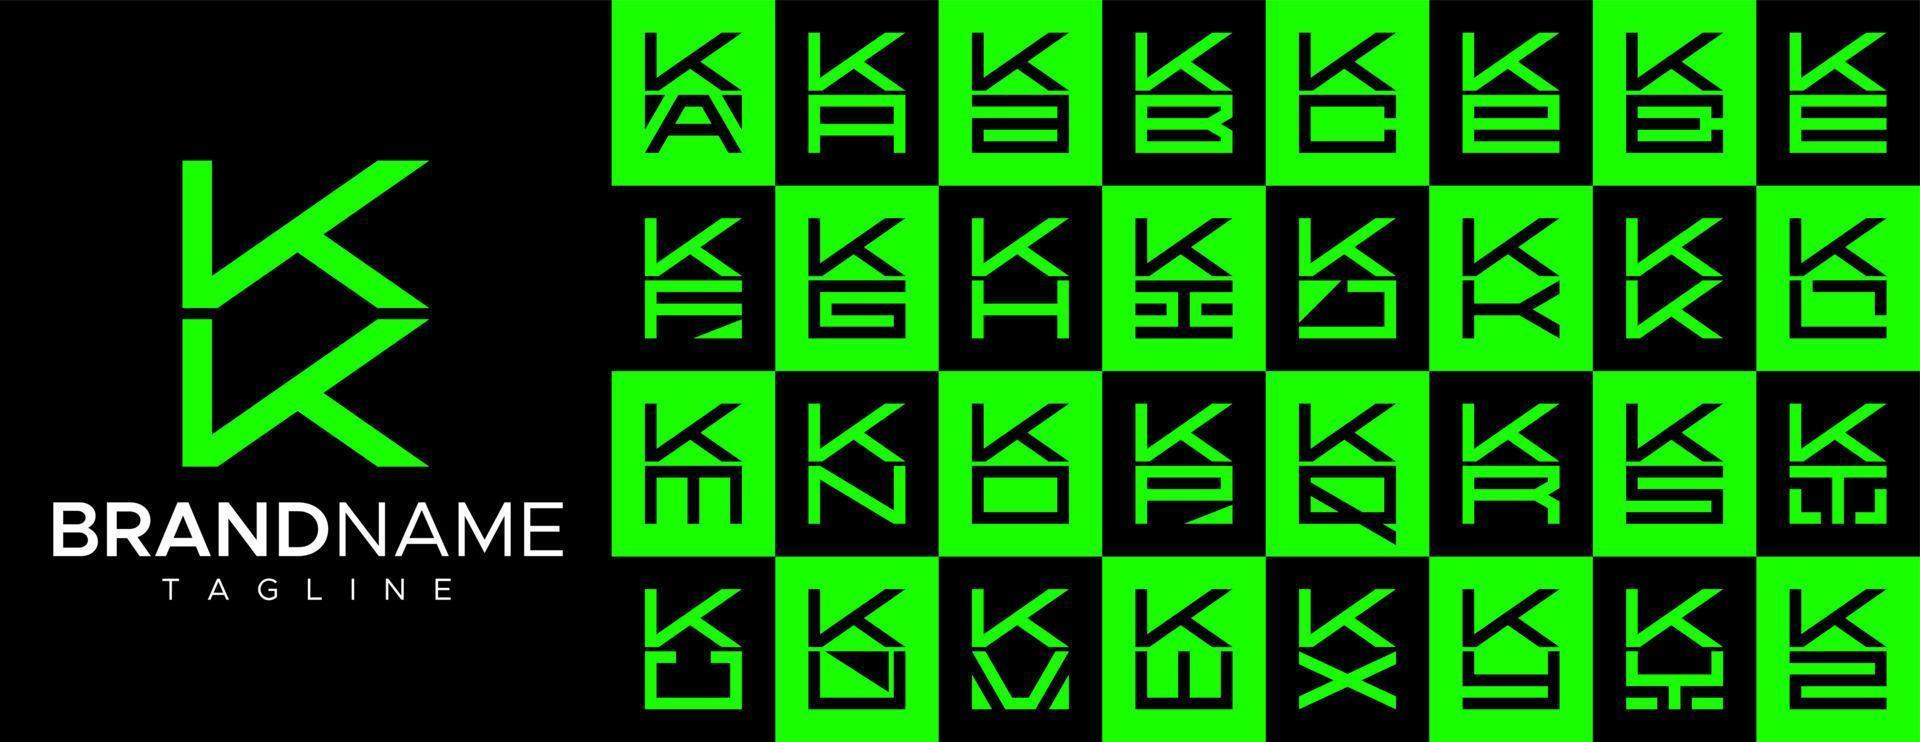 sencillo cuadrado letra k kk logo diseño colocar. moderno caja inicial k logo marca. vector